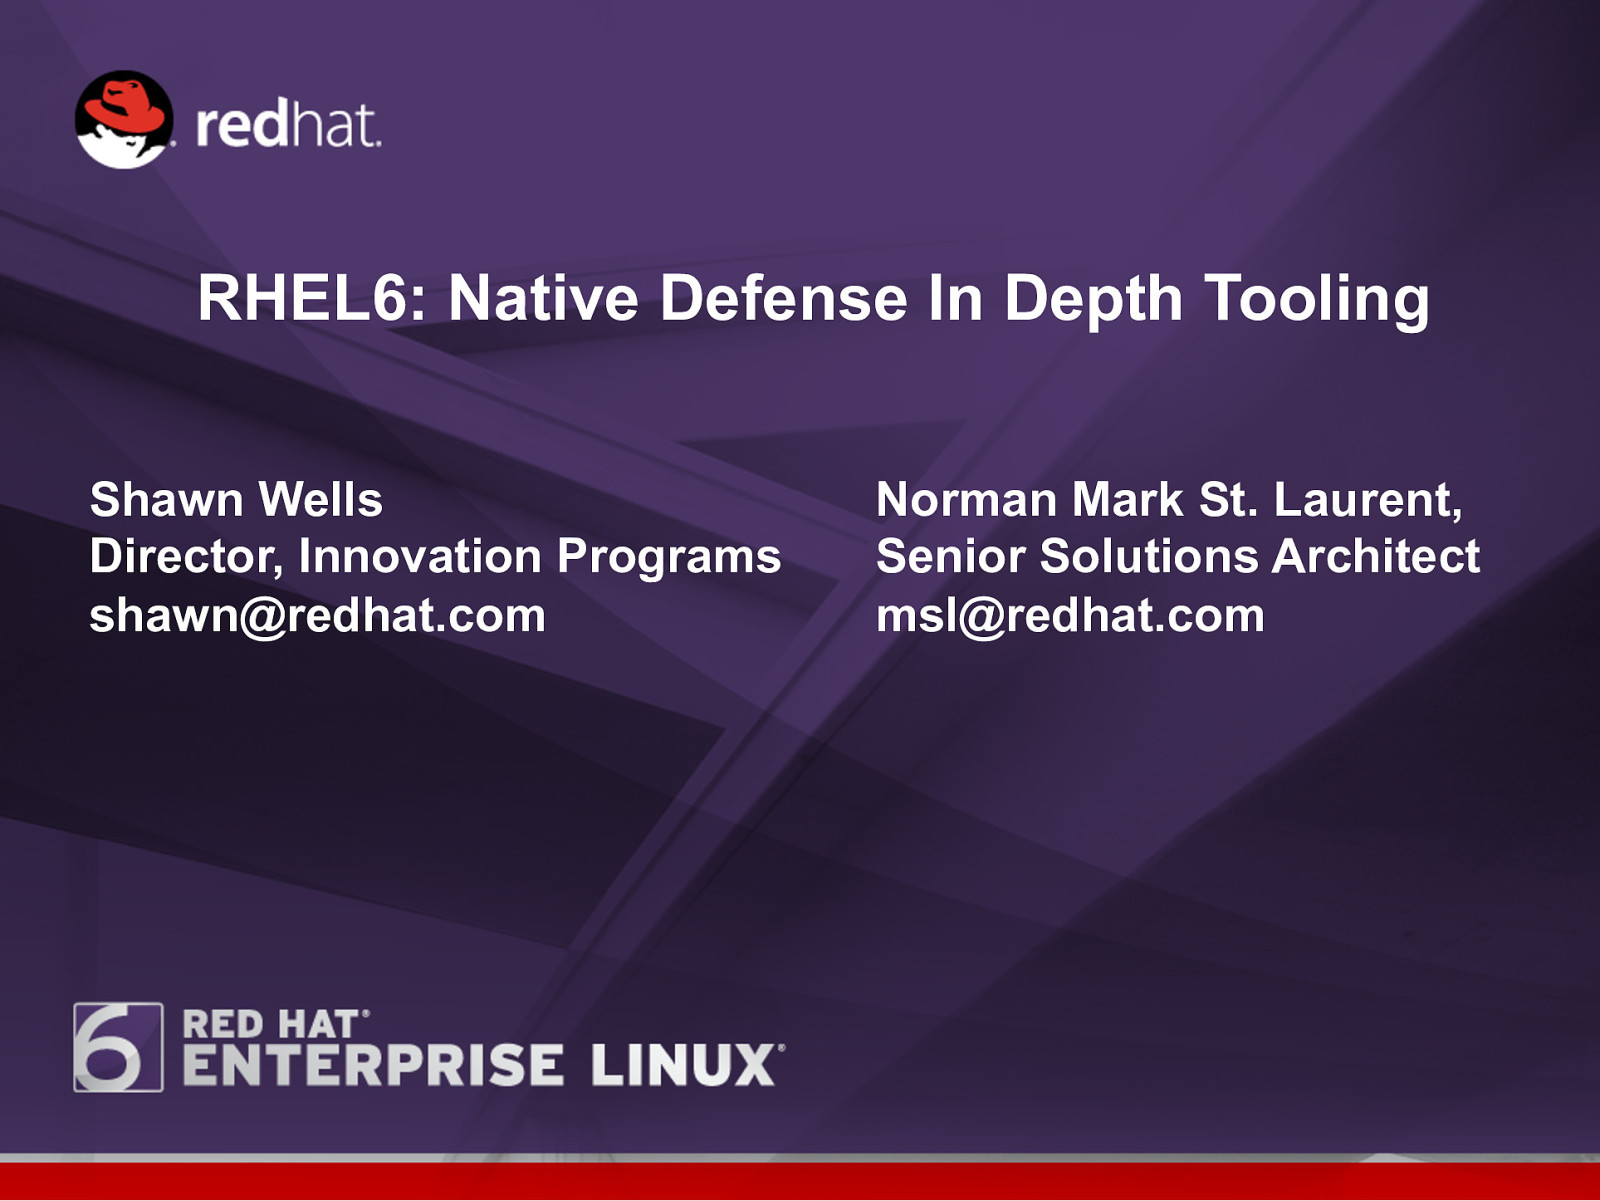 RHEL6: Native Defense in Depth Tooling